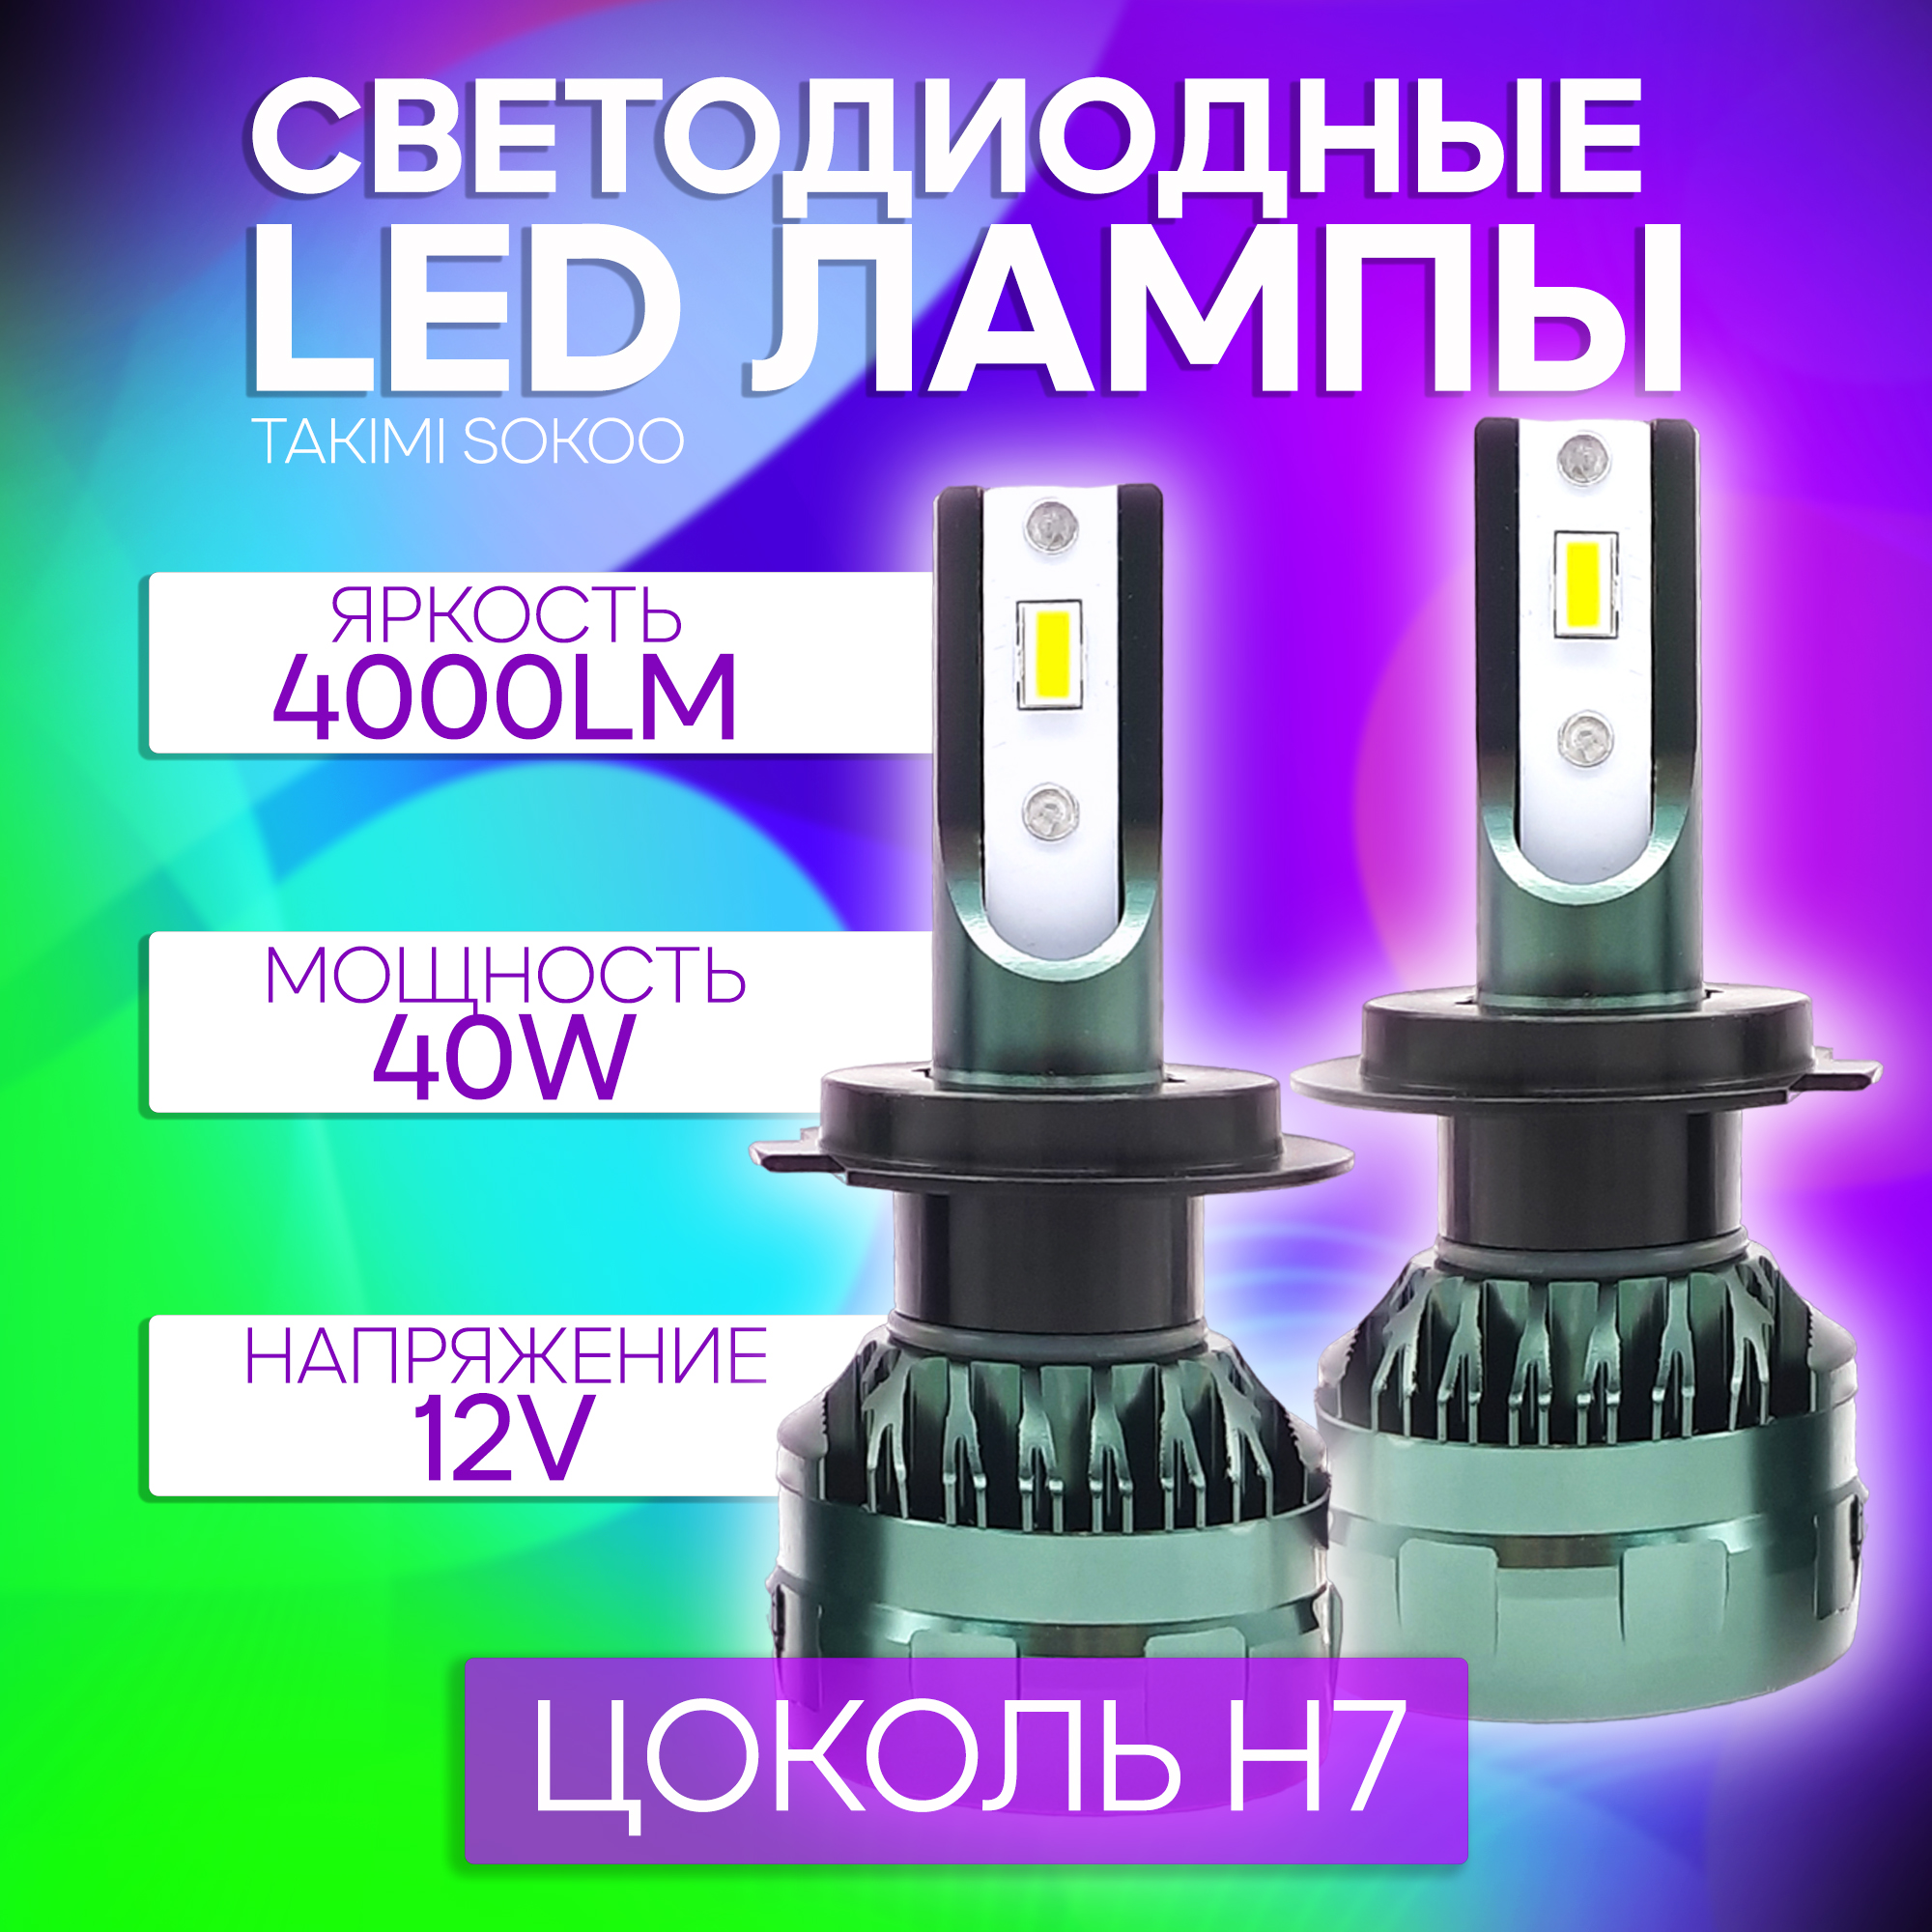 Светодиодные LED лампы Takimi SOKOO H7 5500K 12V